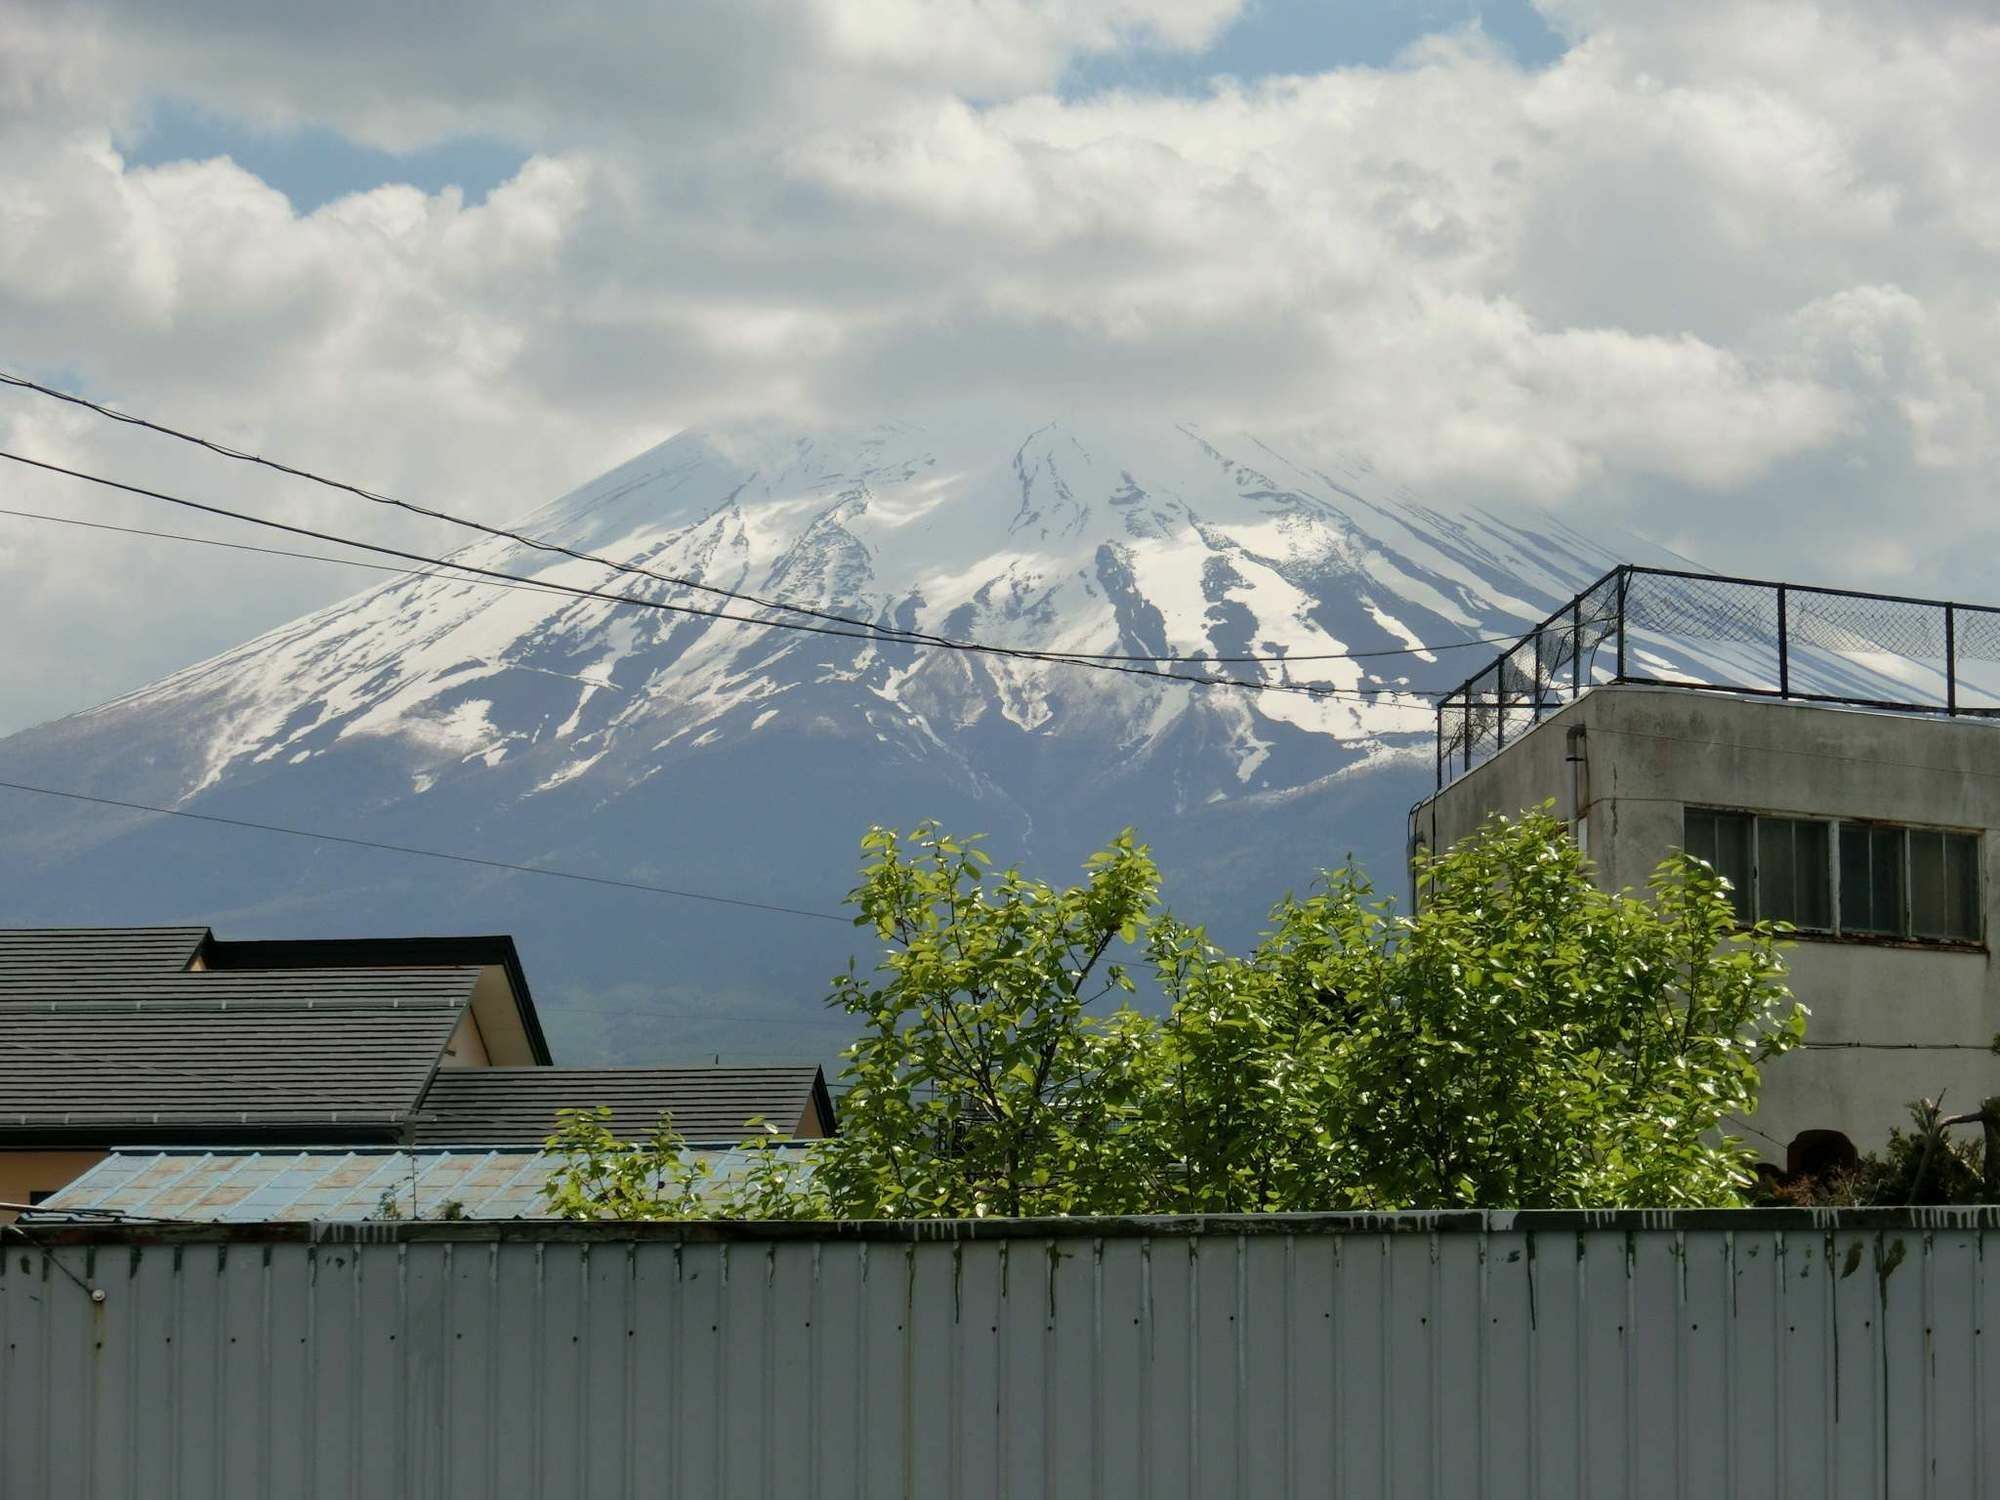 Mt Fuji Hostel Michael'S Fujiyoshida Eksteriør bilde